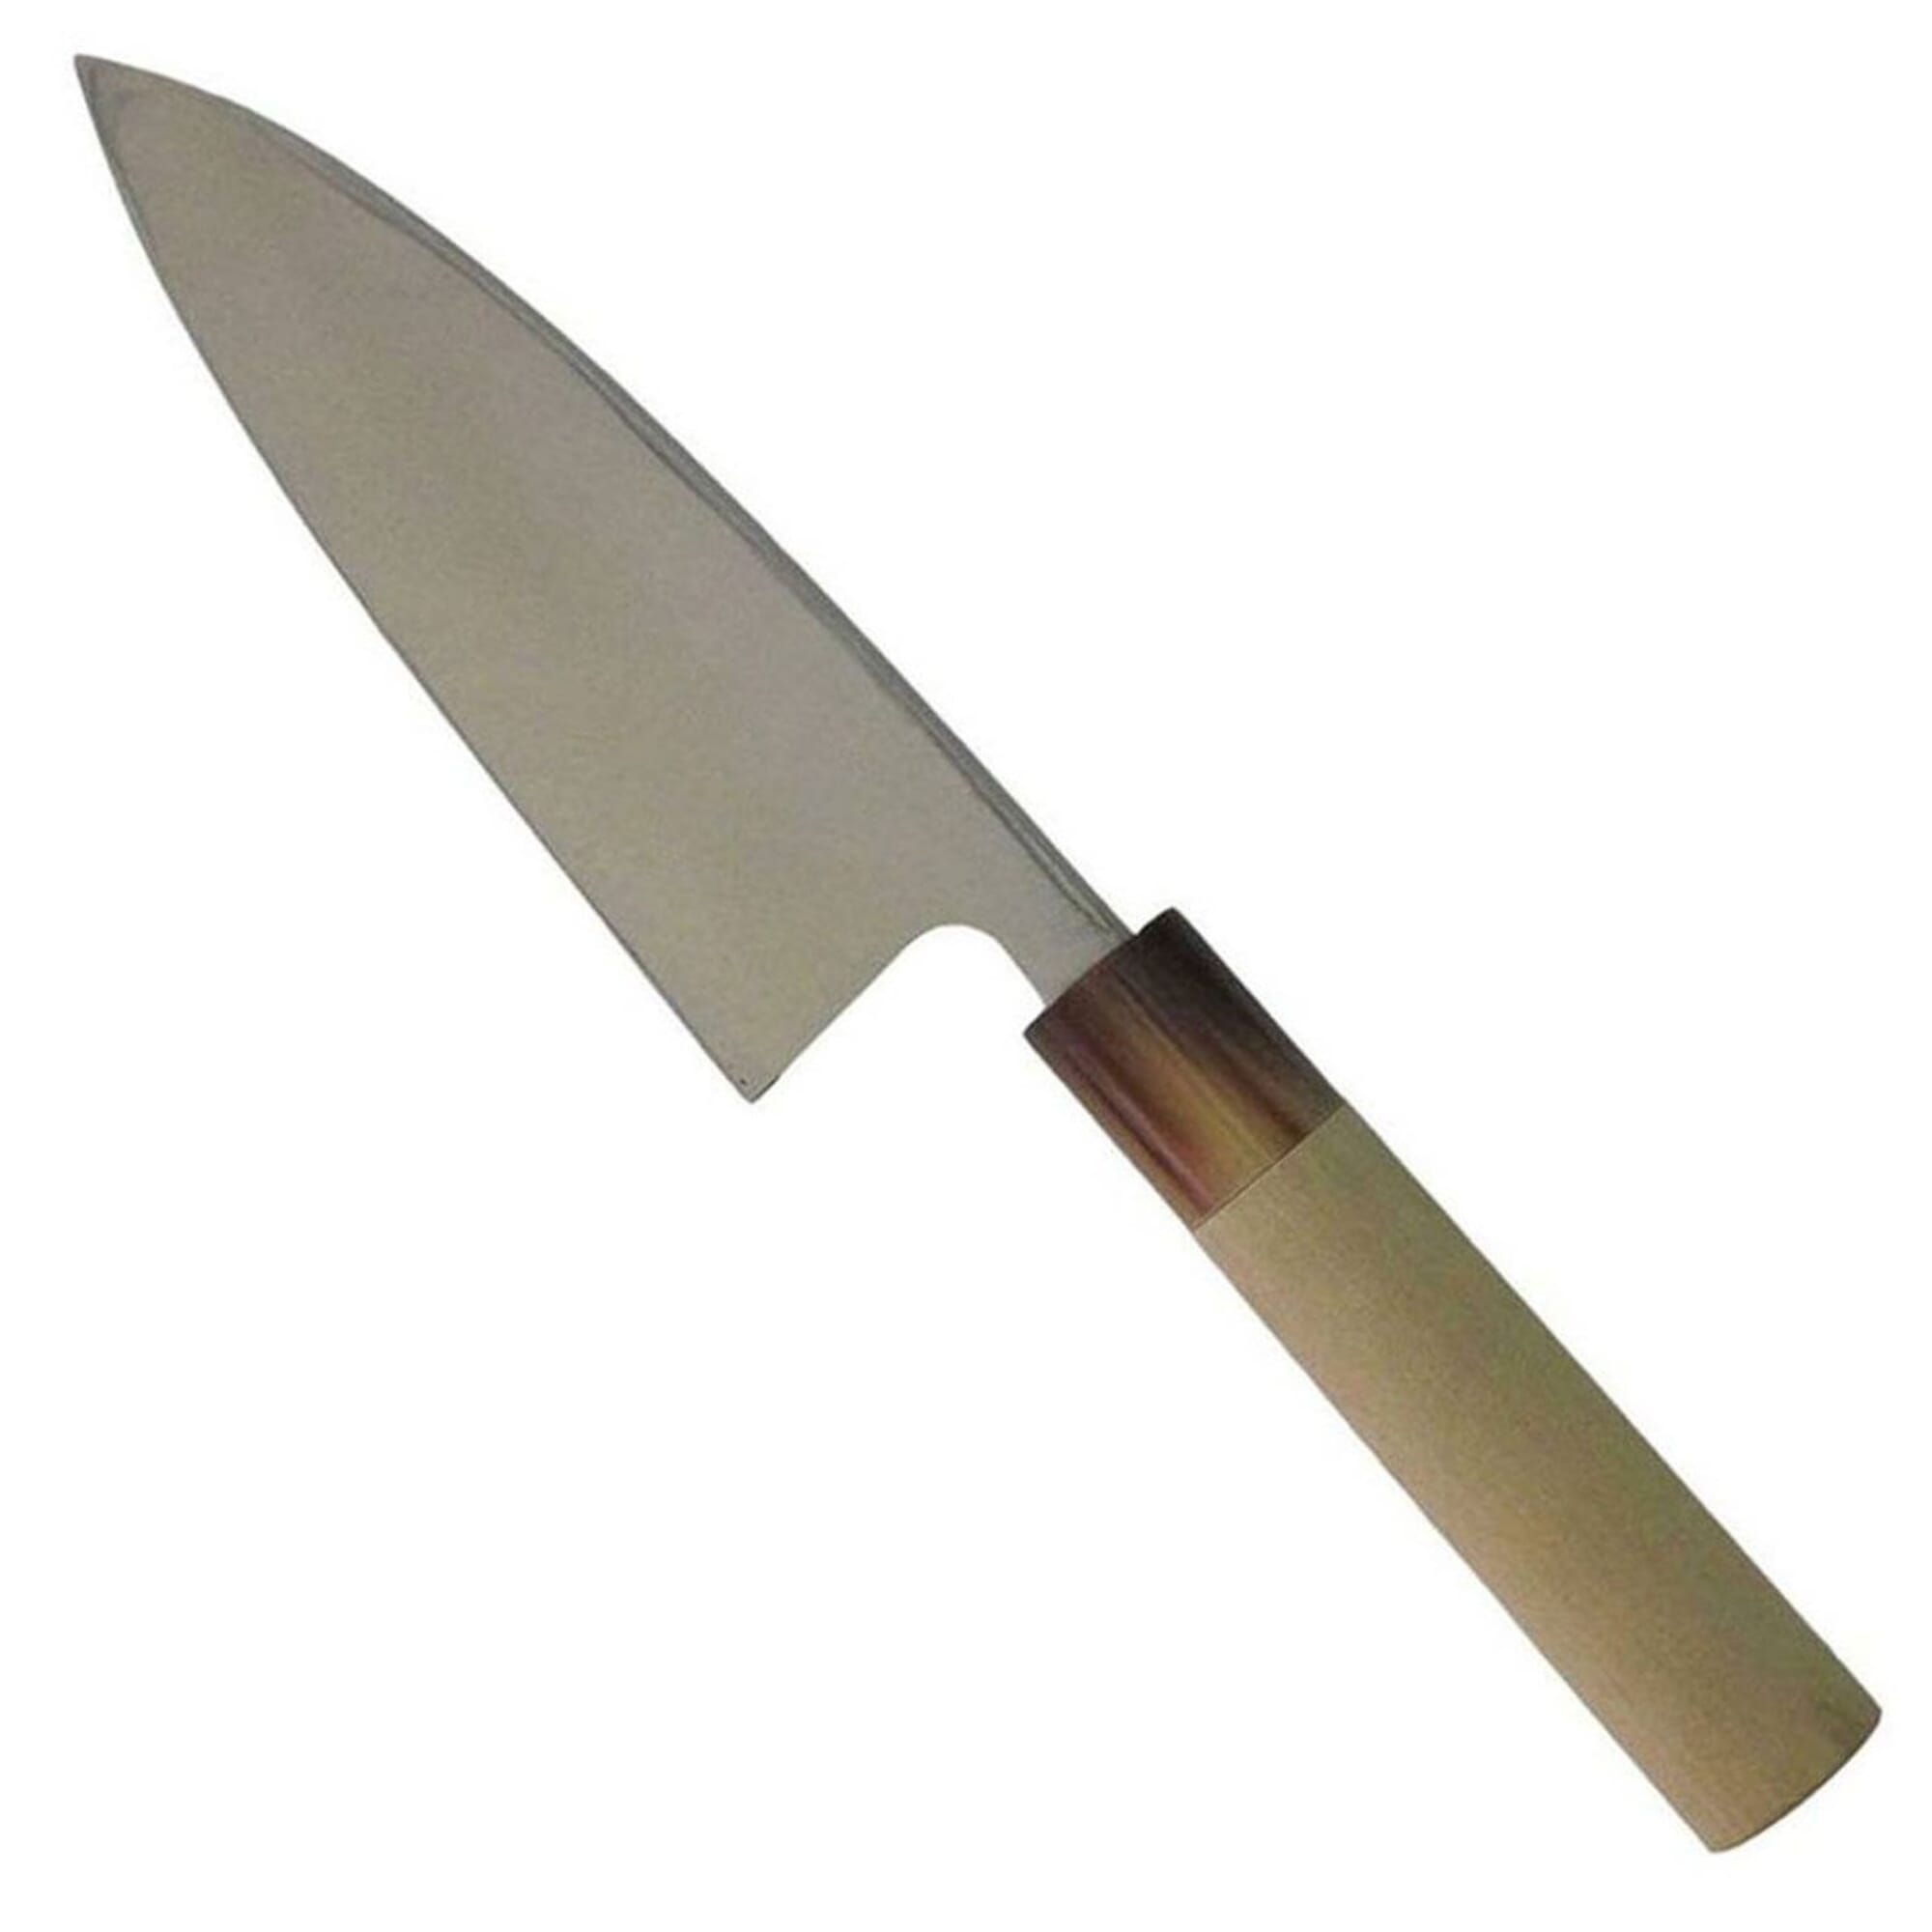  JapanBargain, Japanese Deba Knife, Stainless Steel Chef's Knife,  Made in Japan (1, 160mm): Deba Knives: Home & Kitchen